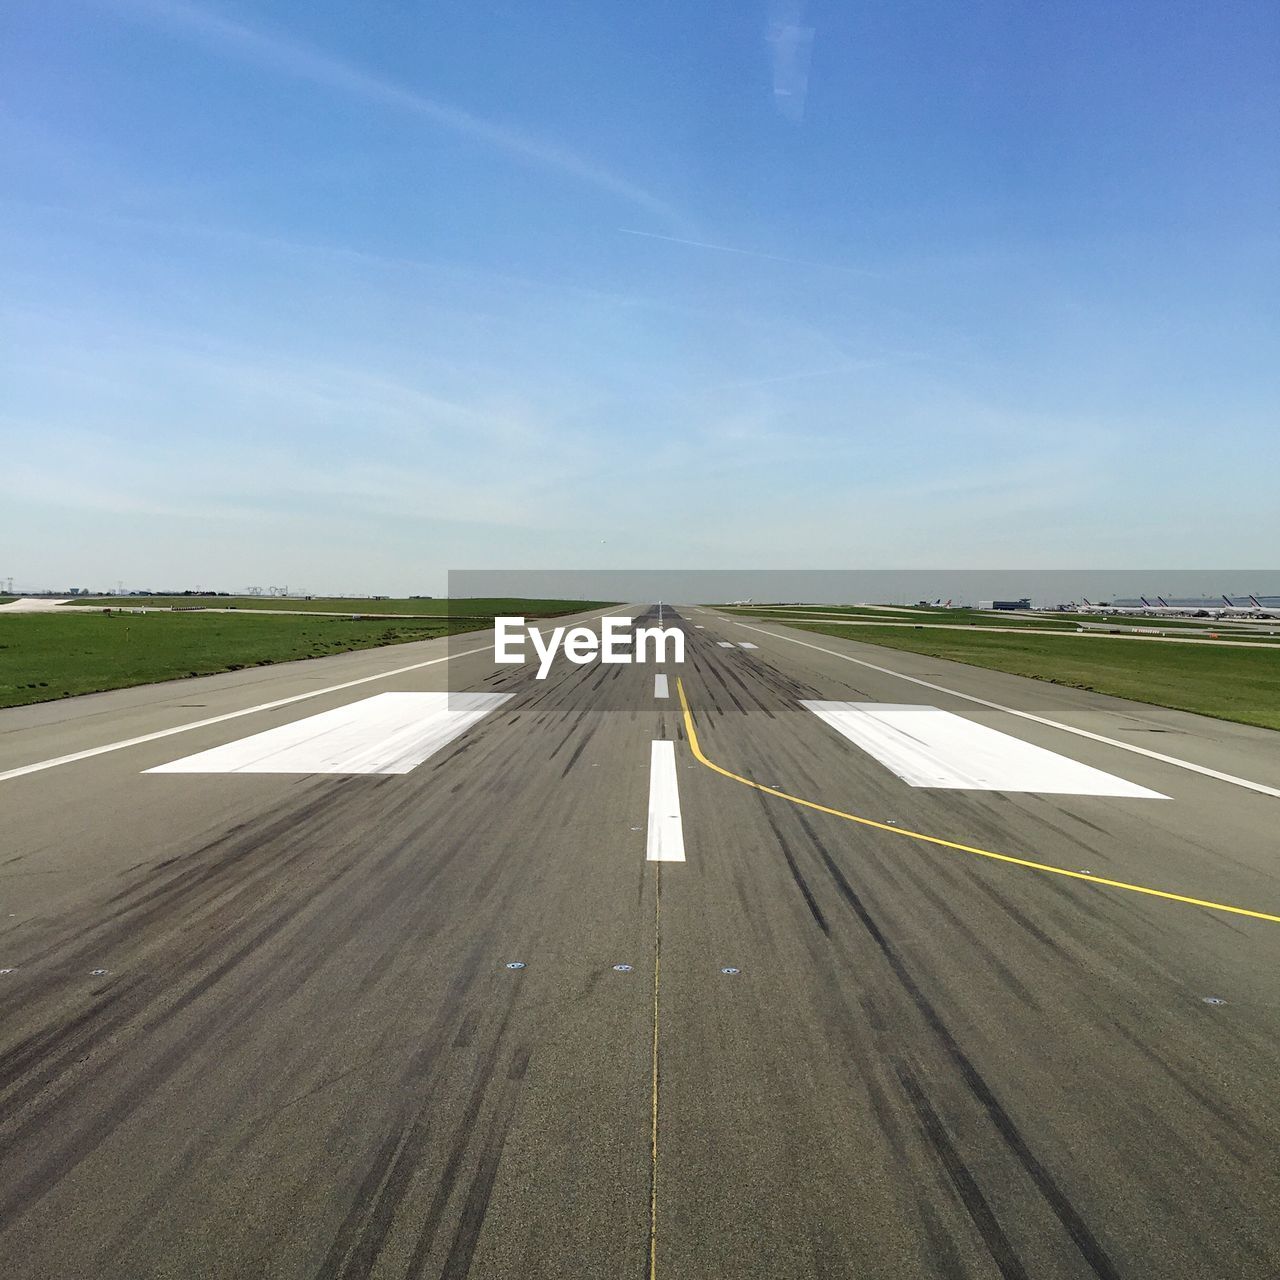 View of airport runway